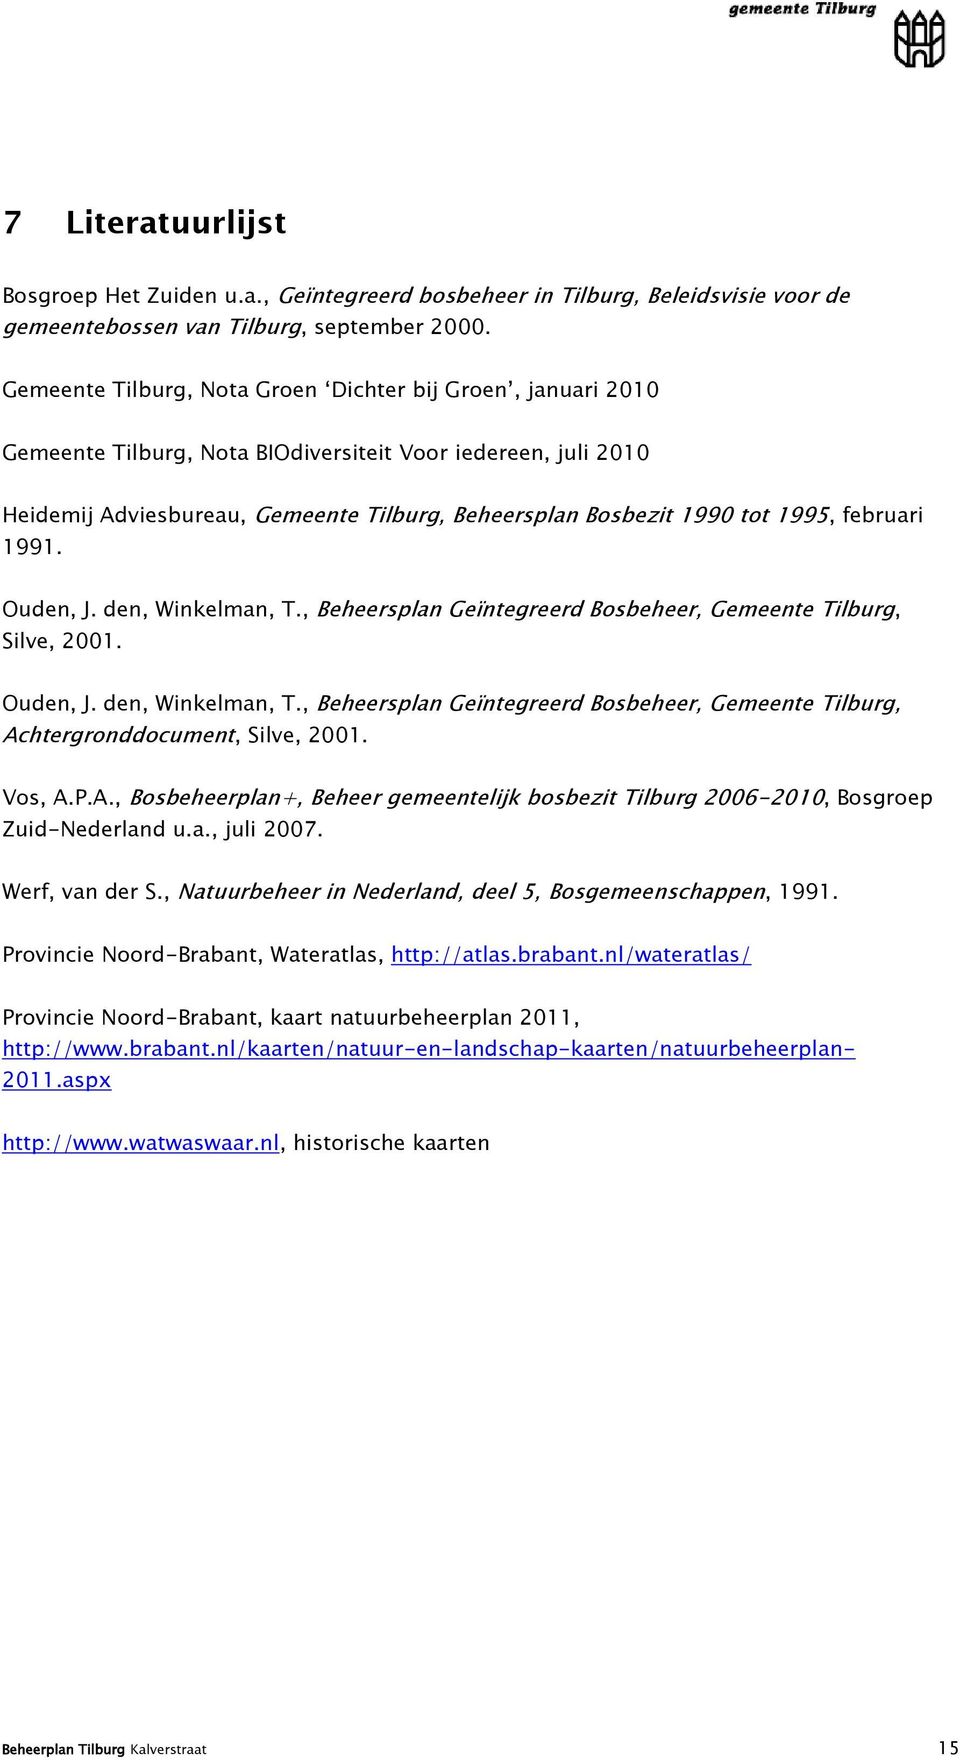 1995, februari 1991. Ouden, J. den, Winkelman, T., Beheersplan Geïntegreerd Bosbeheer, Gemeente Tilburg, Silve, 2001. Ouden, J. den, Winkelman, T., Beheersplan Geïntegreerd Bosbeheer, Gemeente Tilburg, Achtergronddocument, Silve, 2001.